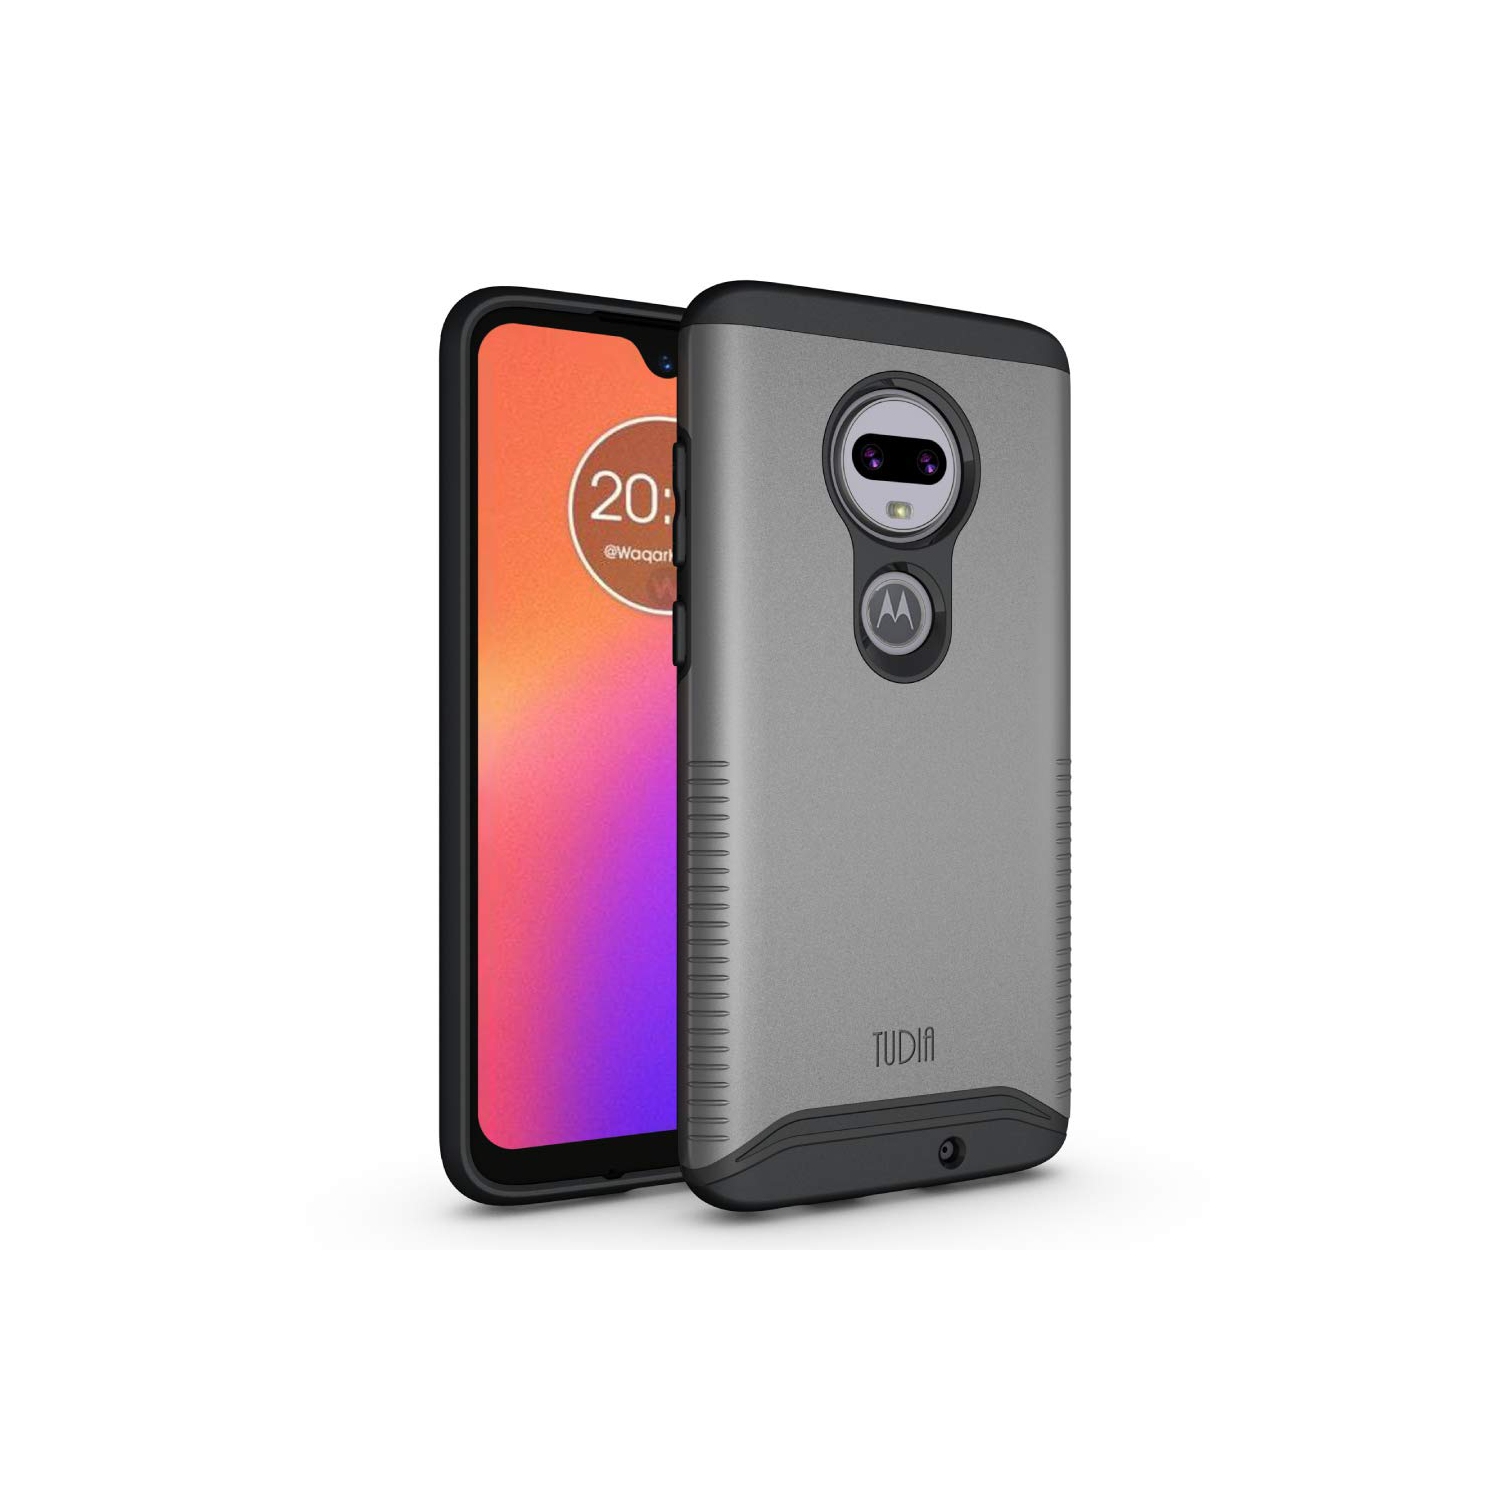 TUDIA Slim-Fit [Merge] Dual Layer Extreme Drop Protection/Rugged Phone Case for Motorola Moto G7/G7 Plus (Metallic Slate)